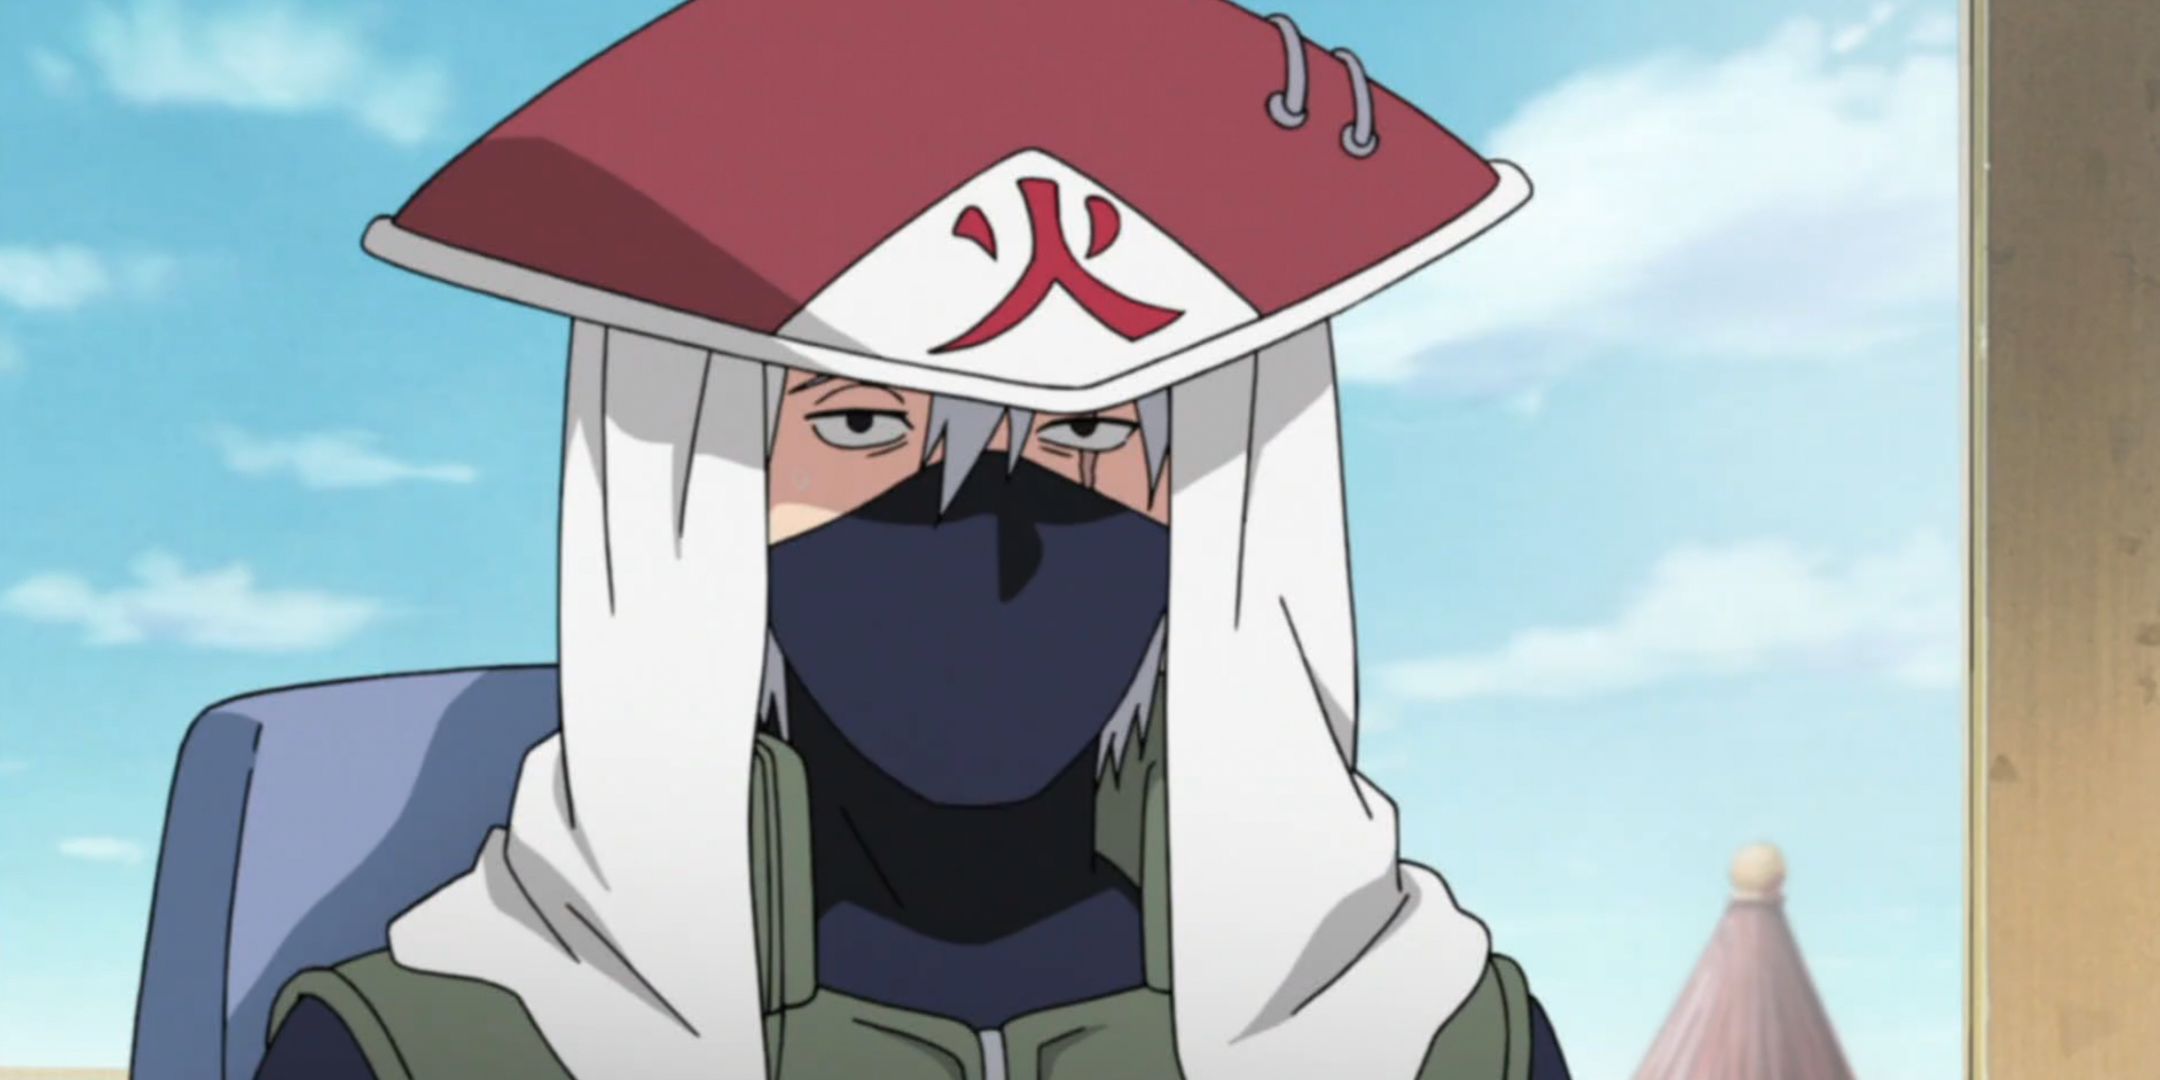 Kakashi wears the traditional Hokage garb at his desk in Naruto Shippuden